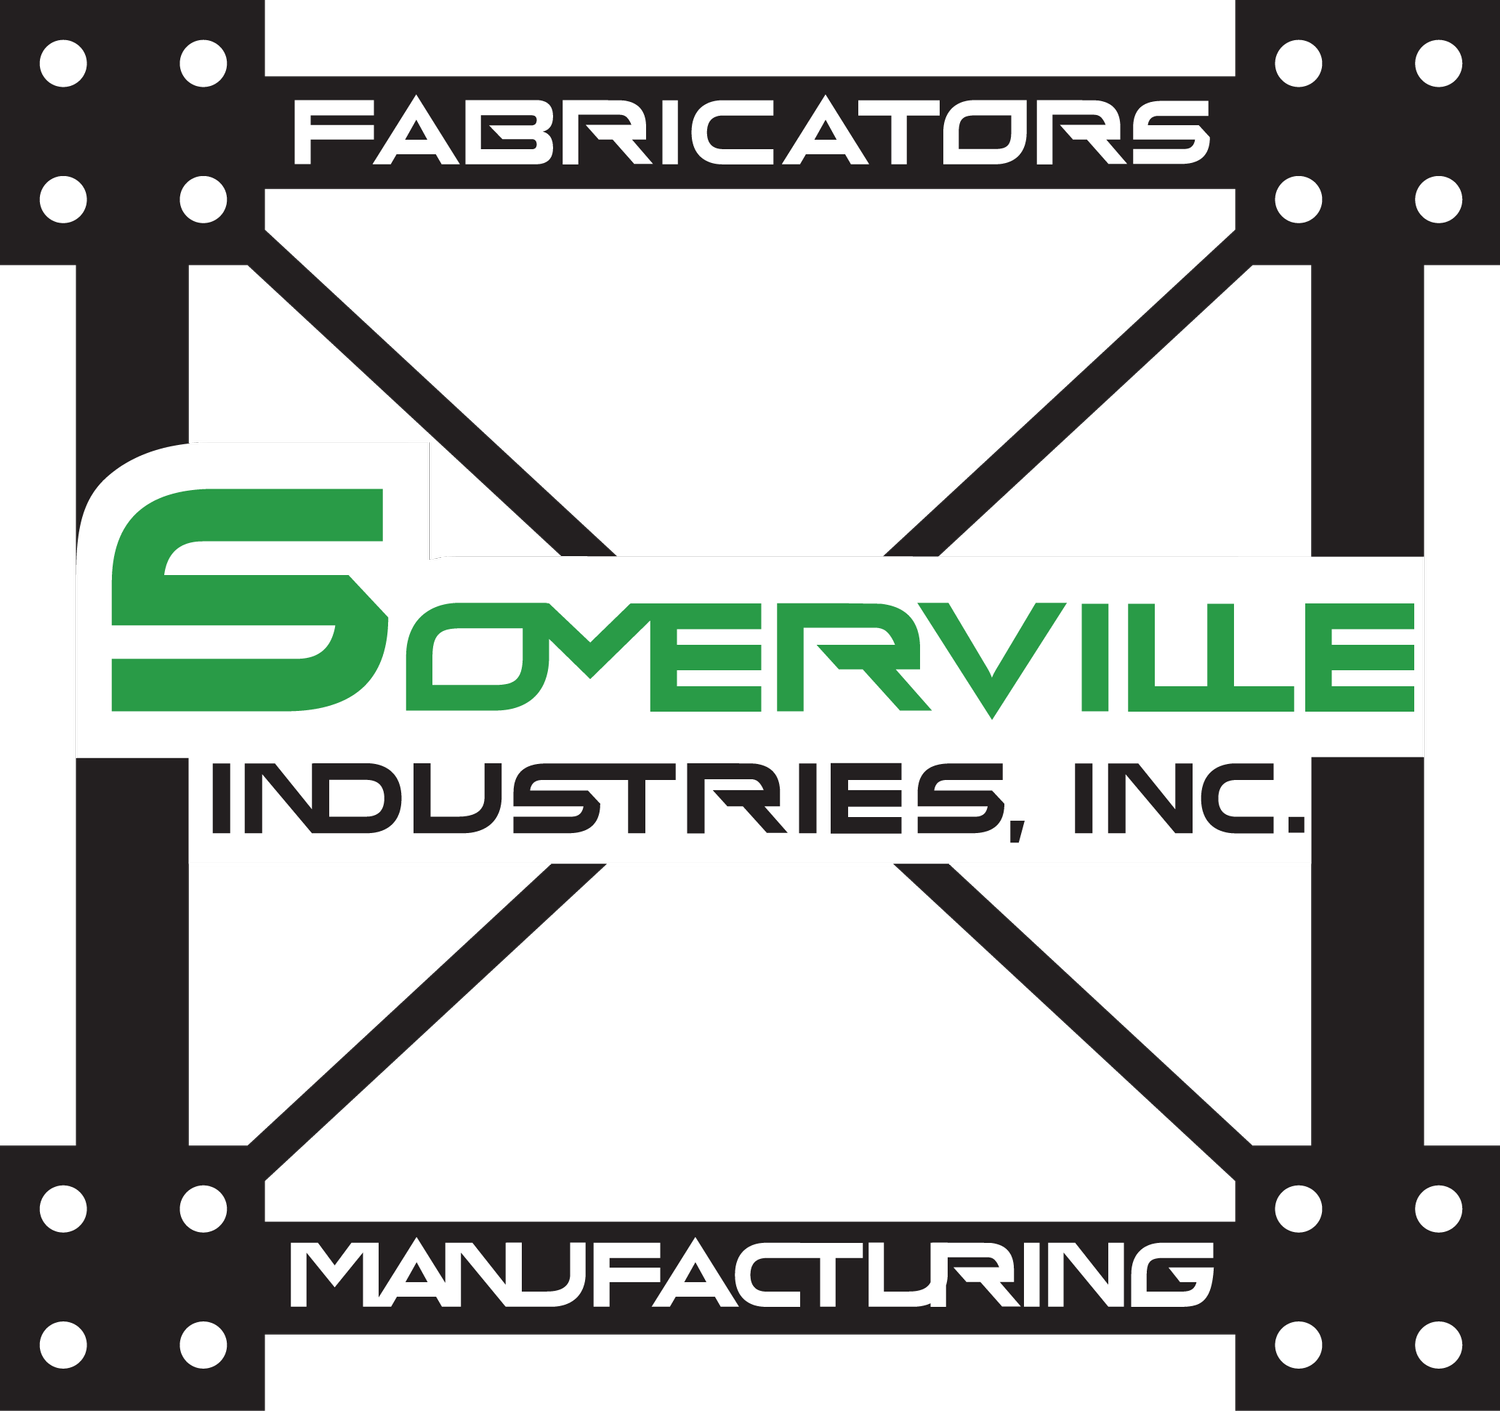 Somerville Industries, INC.